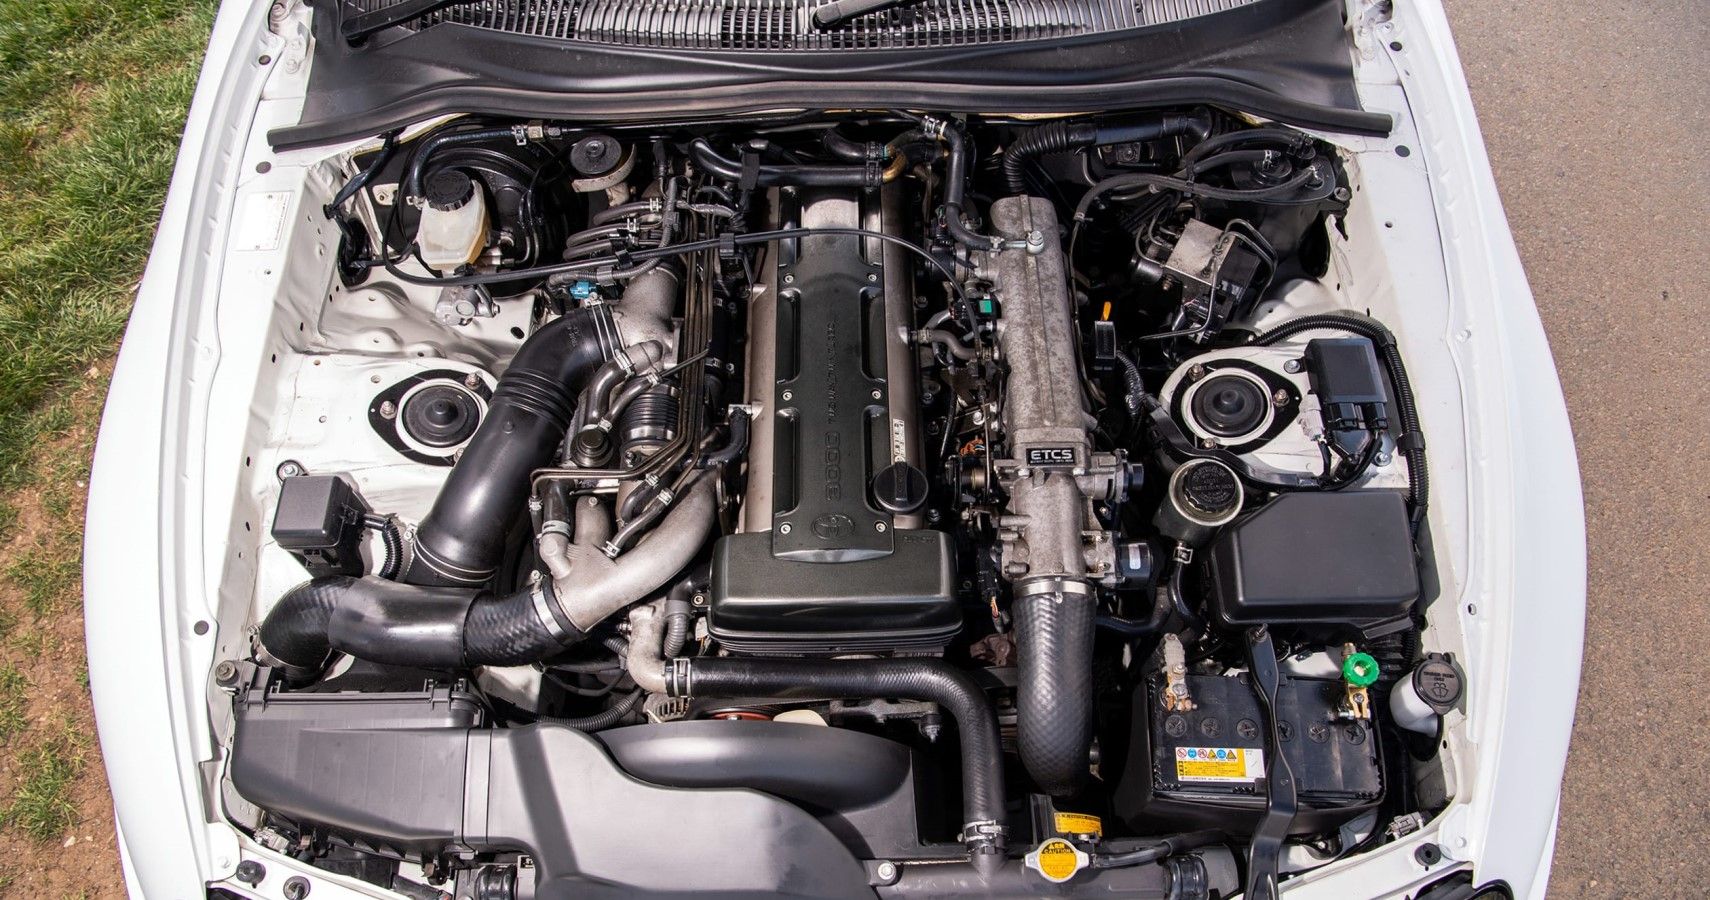 Mk4 Toyota Supra engine bay view